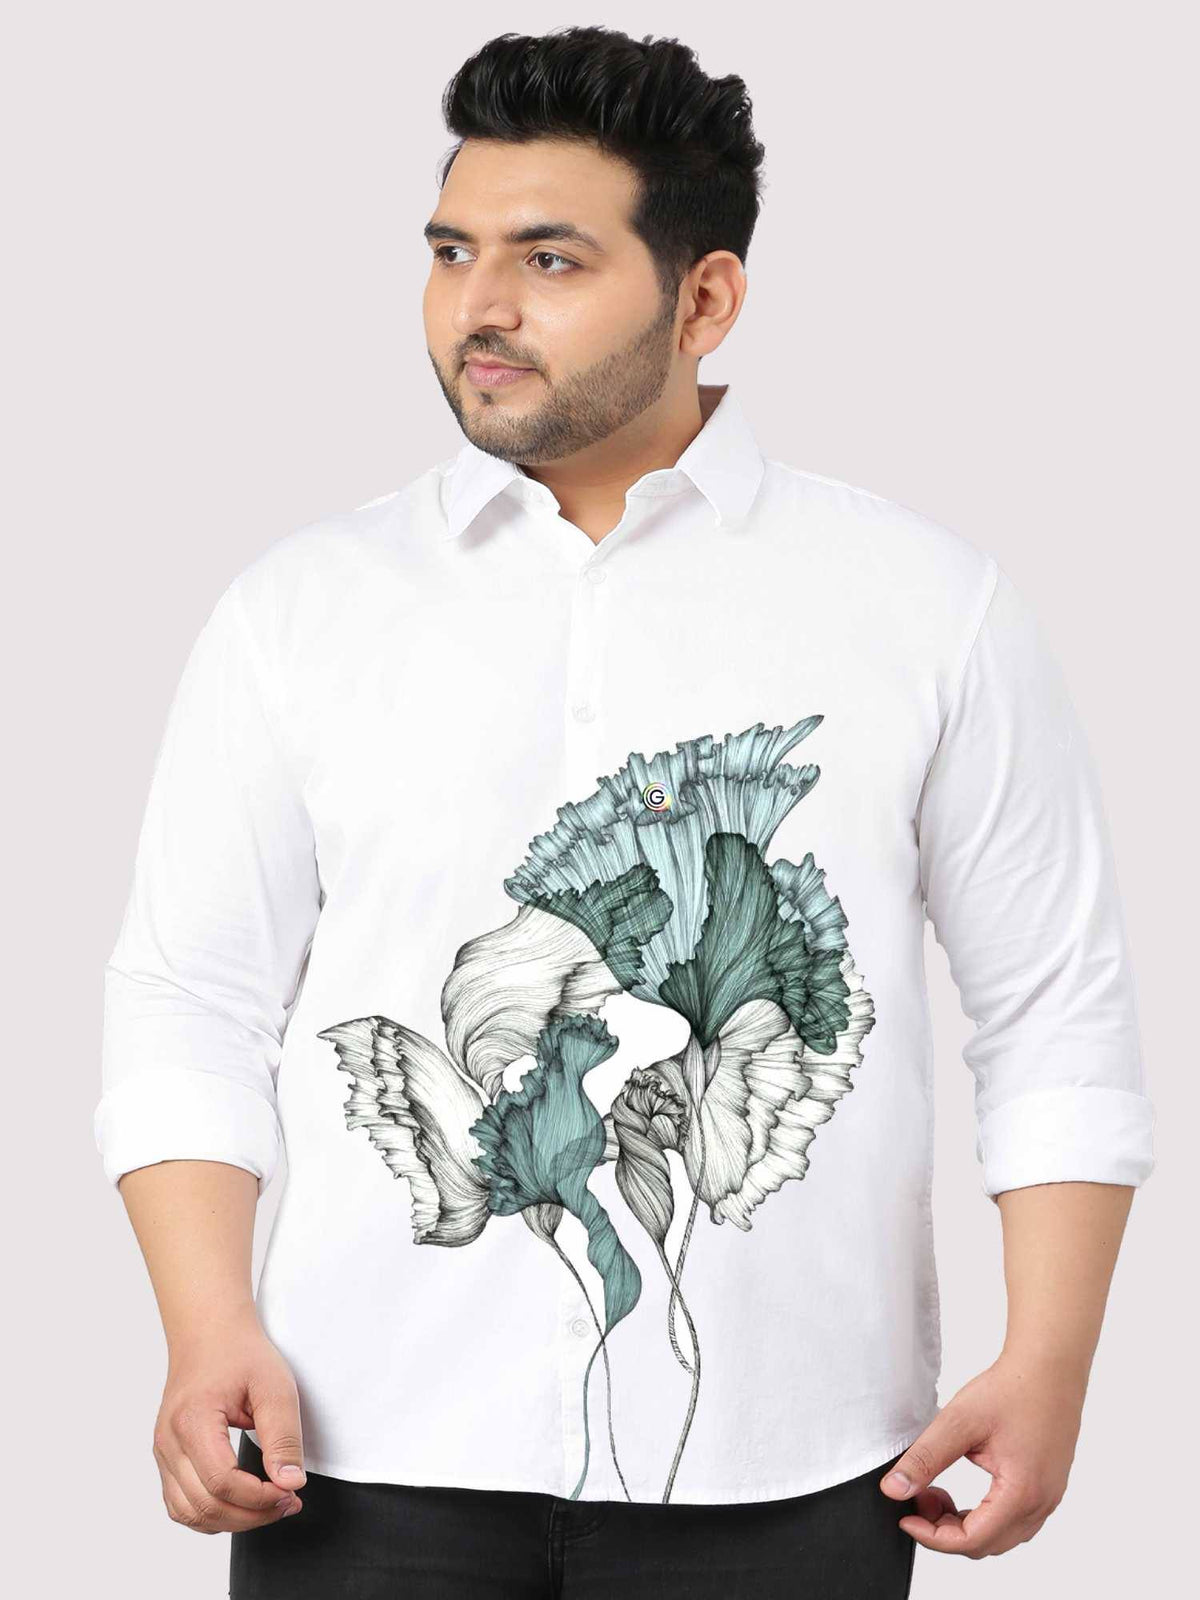 Abstract Printed White Shirt Men's Plus Size - Guniaa Fashions